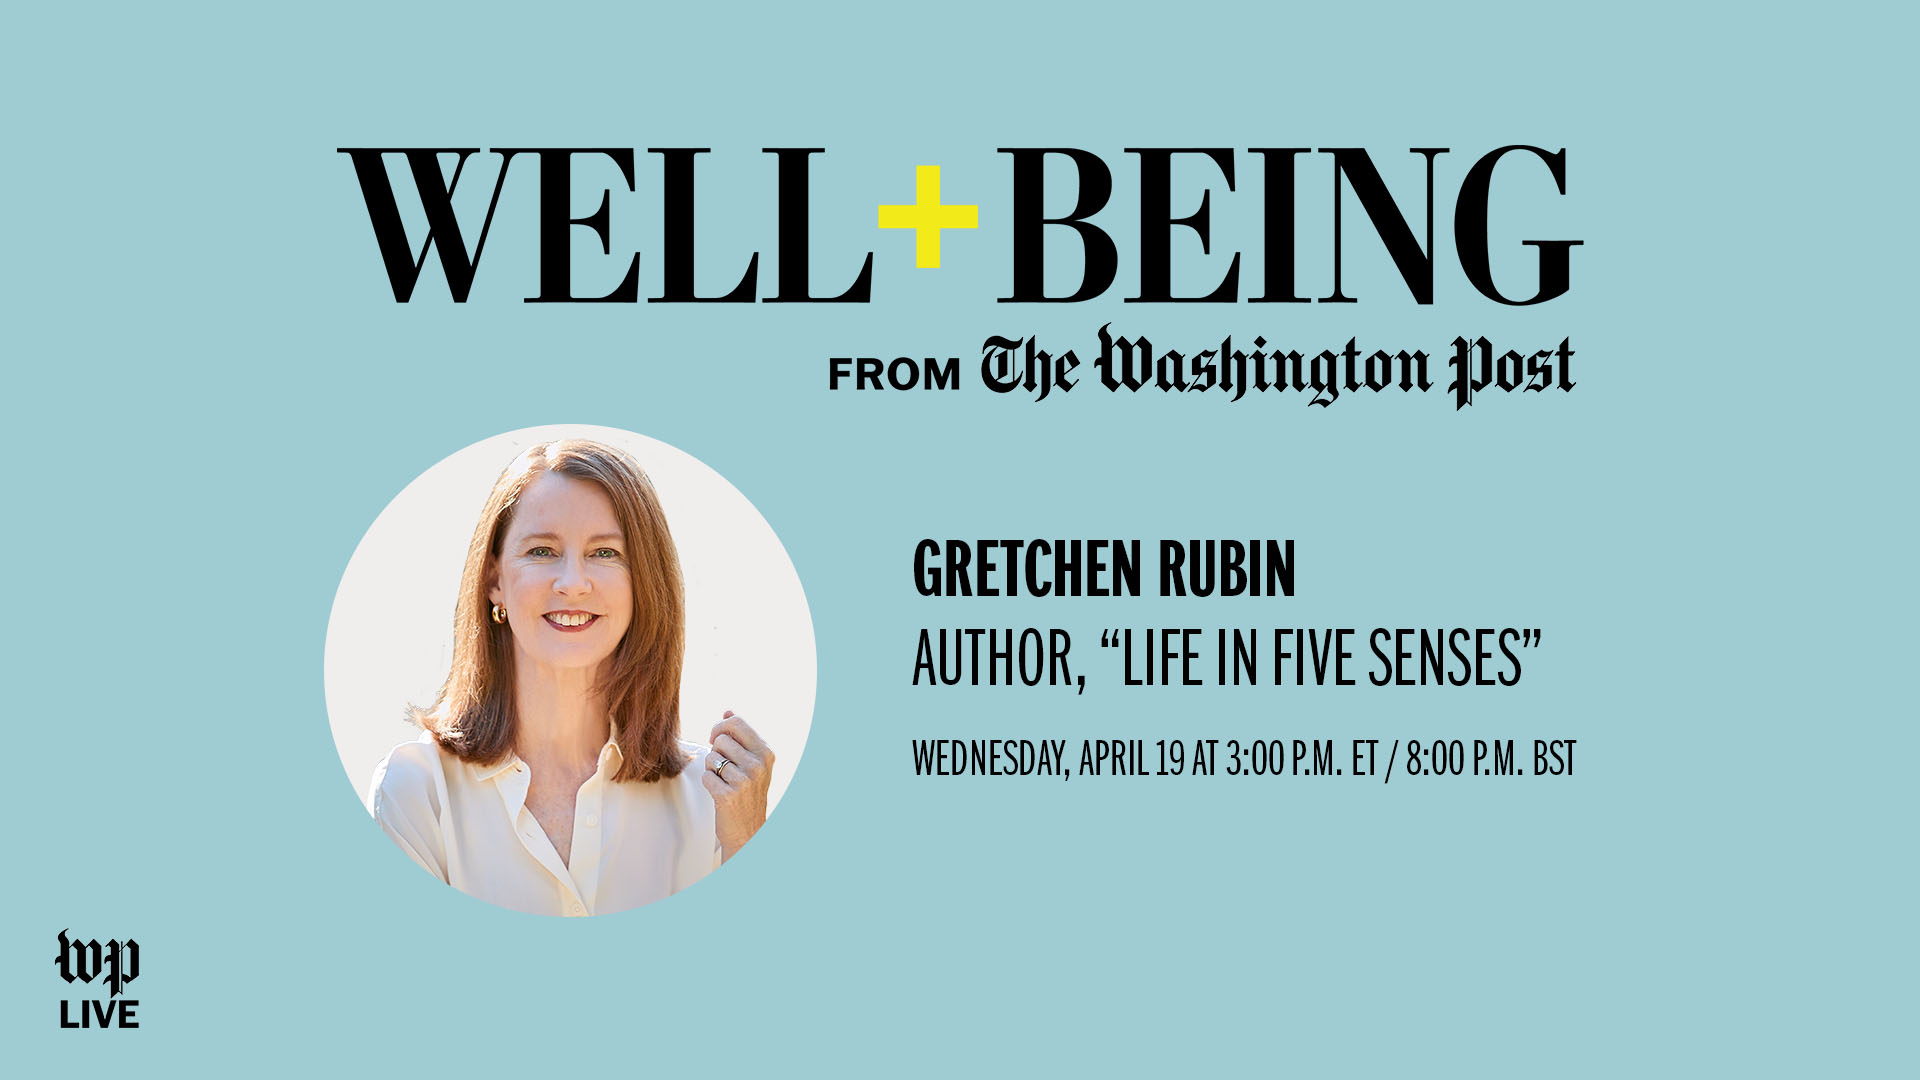 Washington　Life　Gretchen　Five　in　The　Senses'　with　Rubin　Post